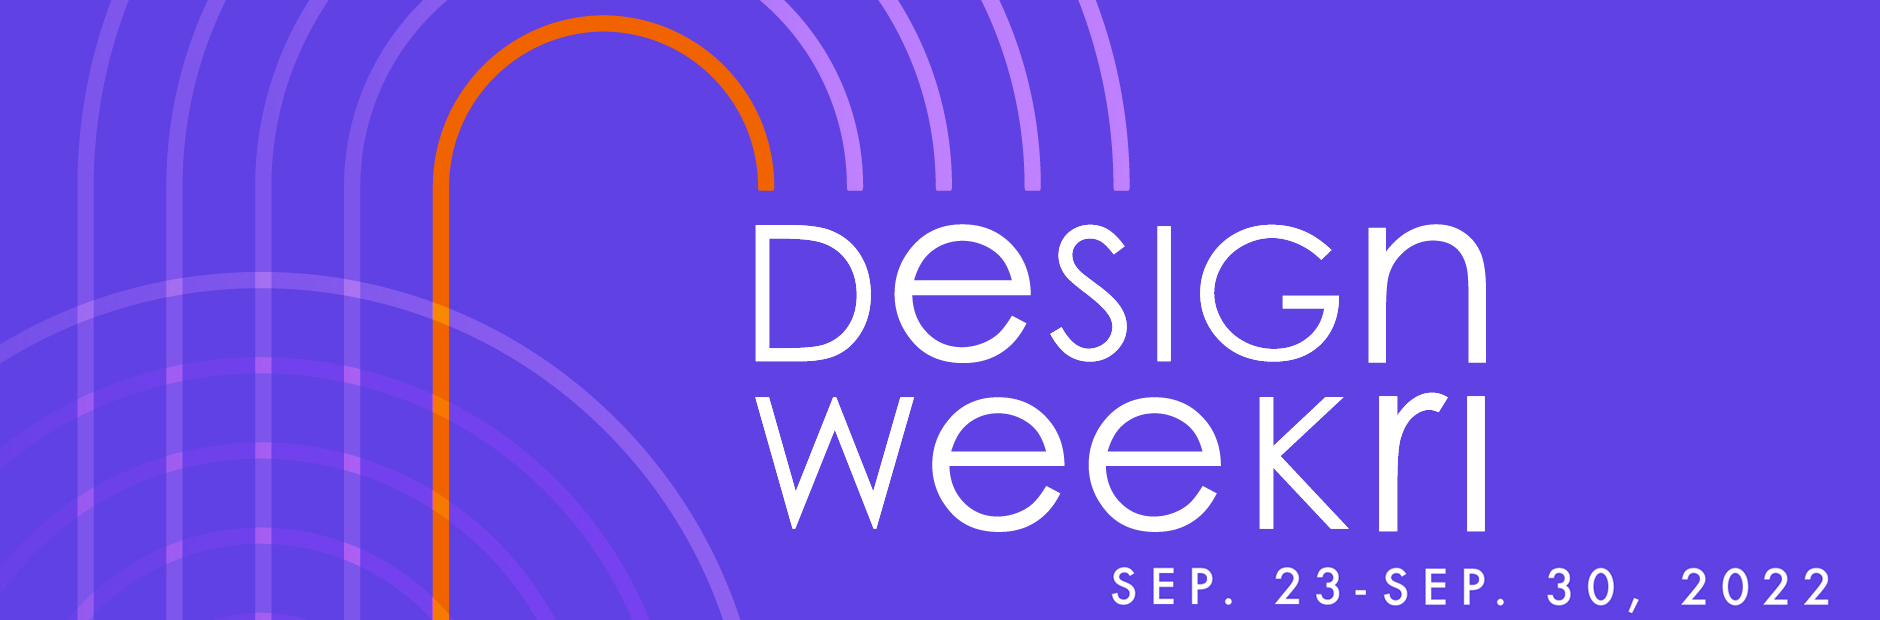 Design Week RI 2022 Banner